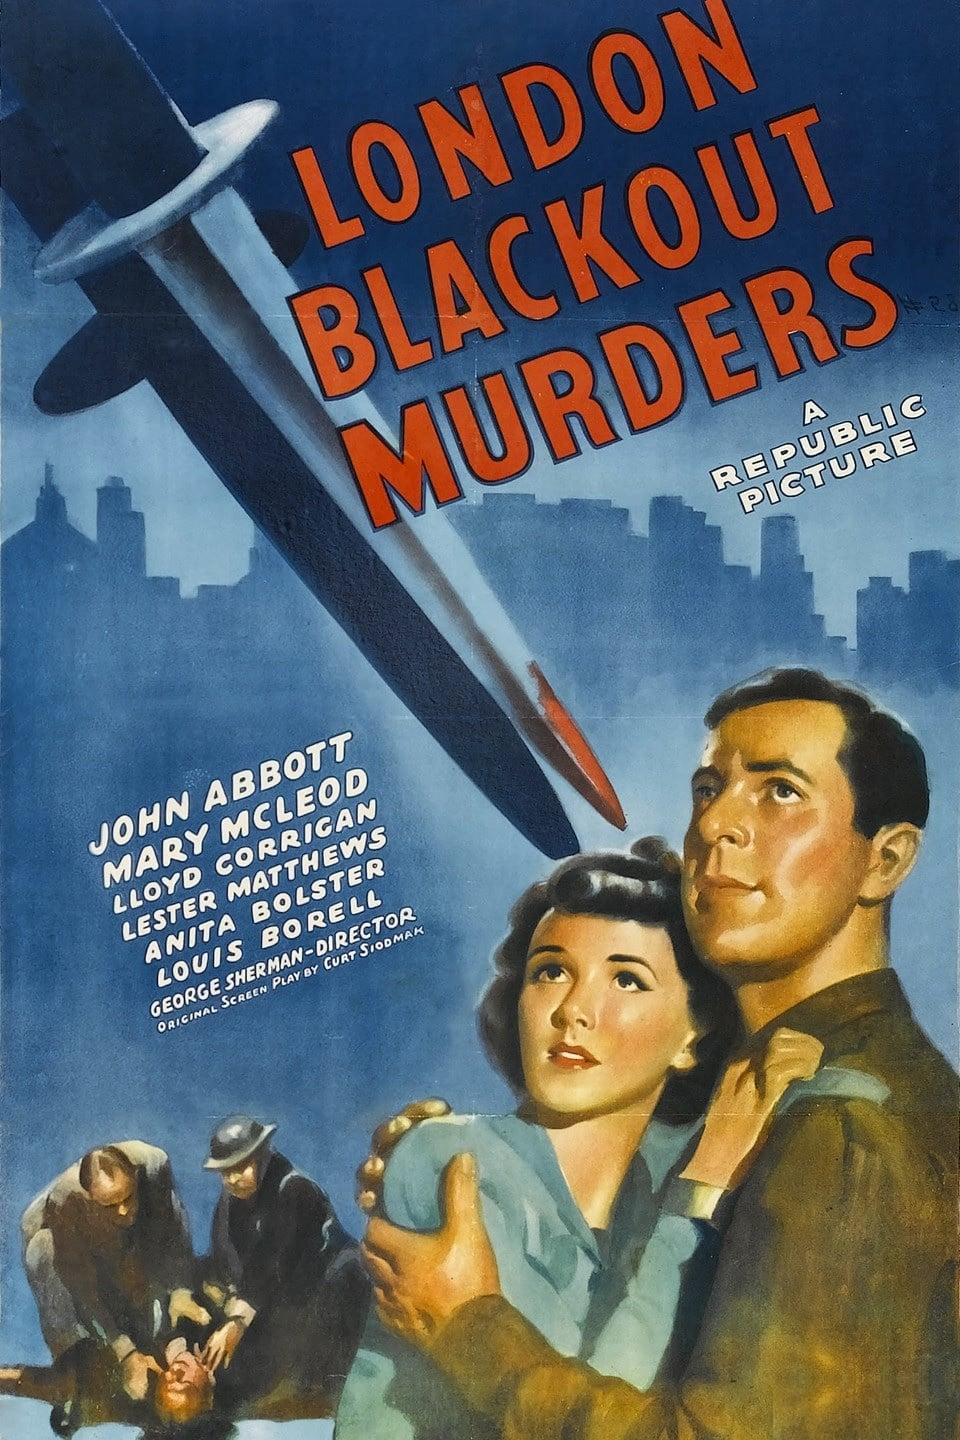 London Blackout Murders poster